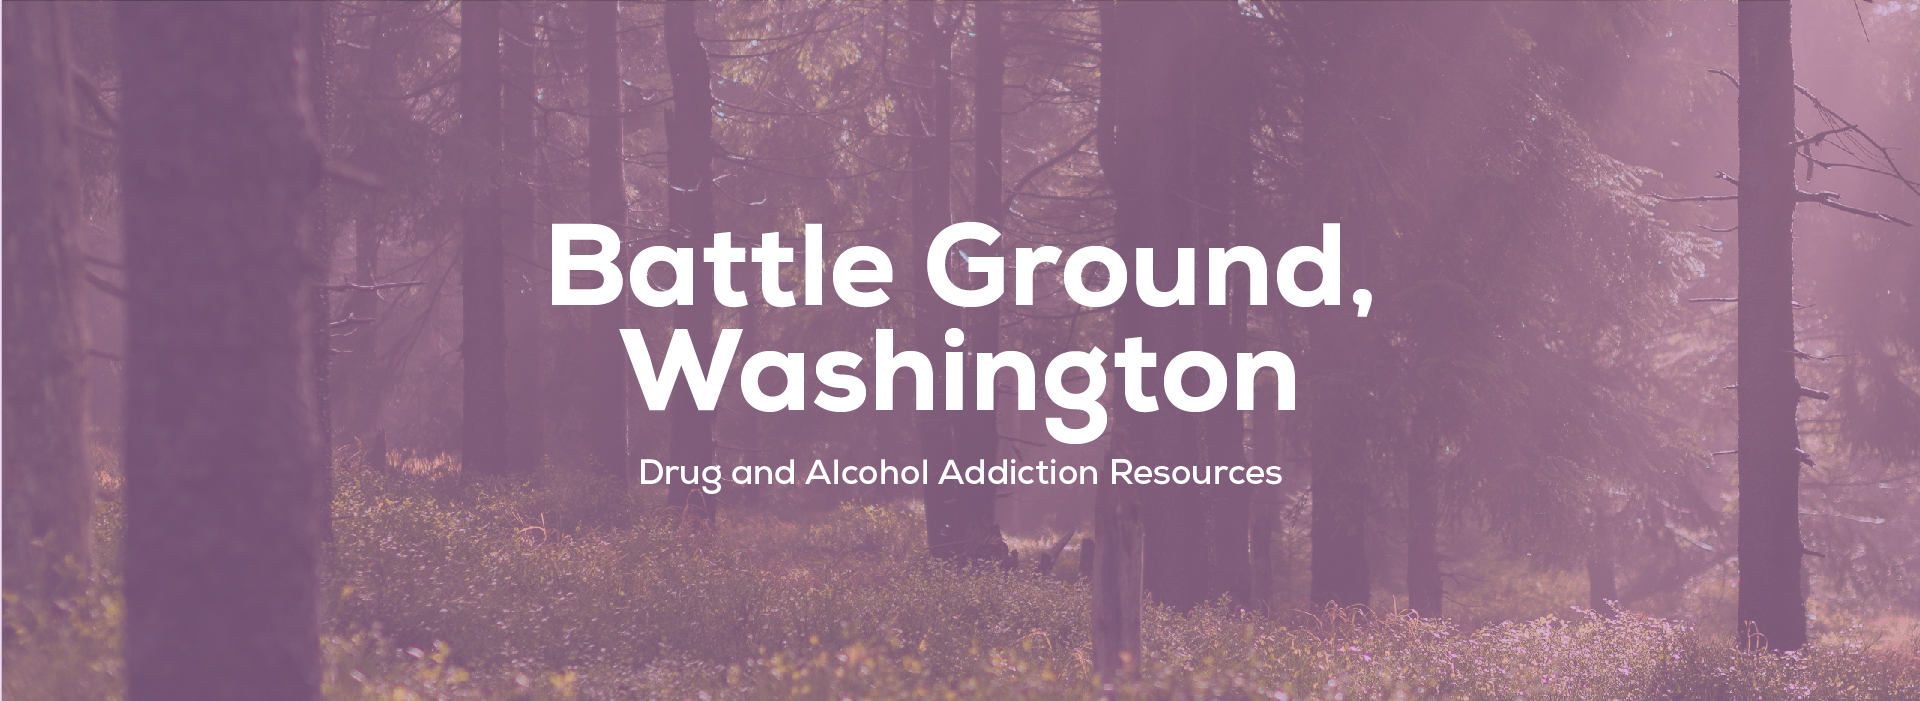 Battle Ground, Washington addiction resources